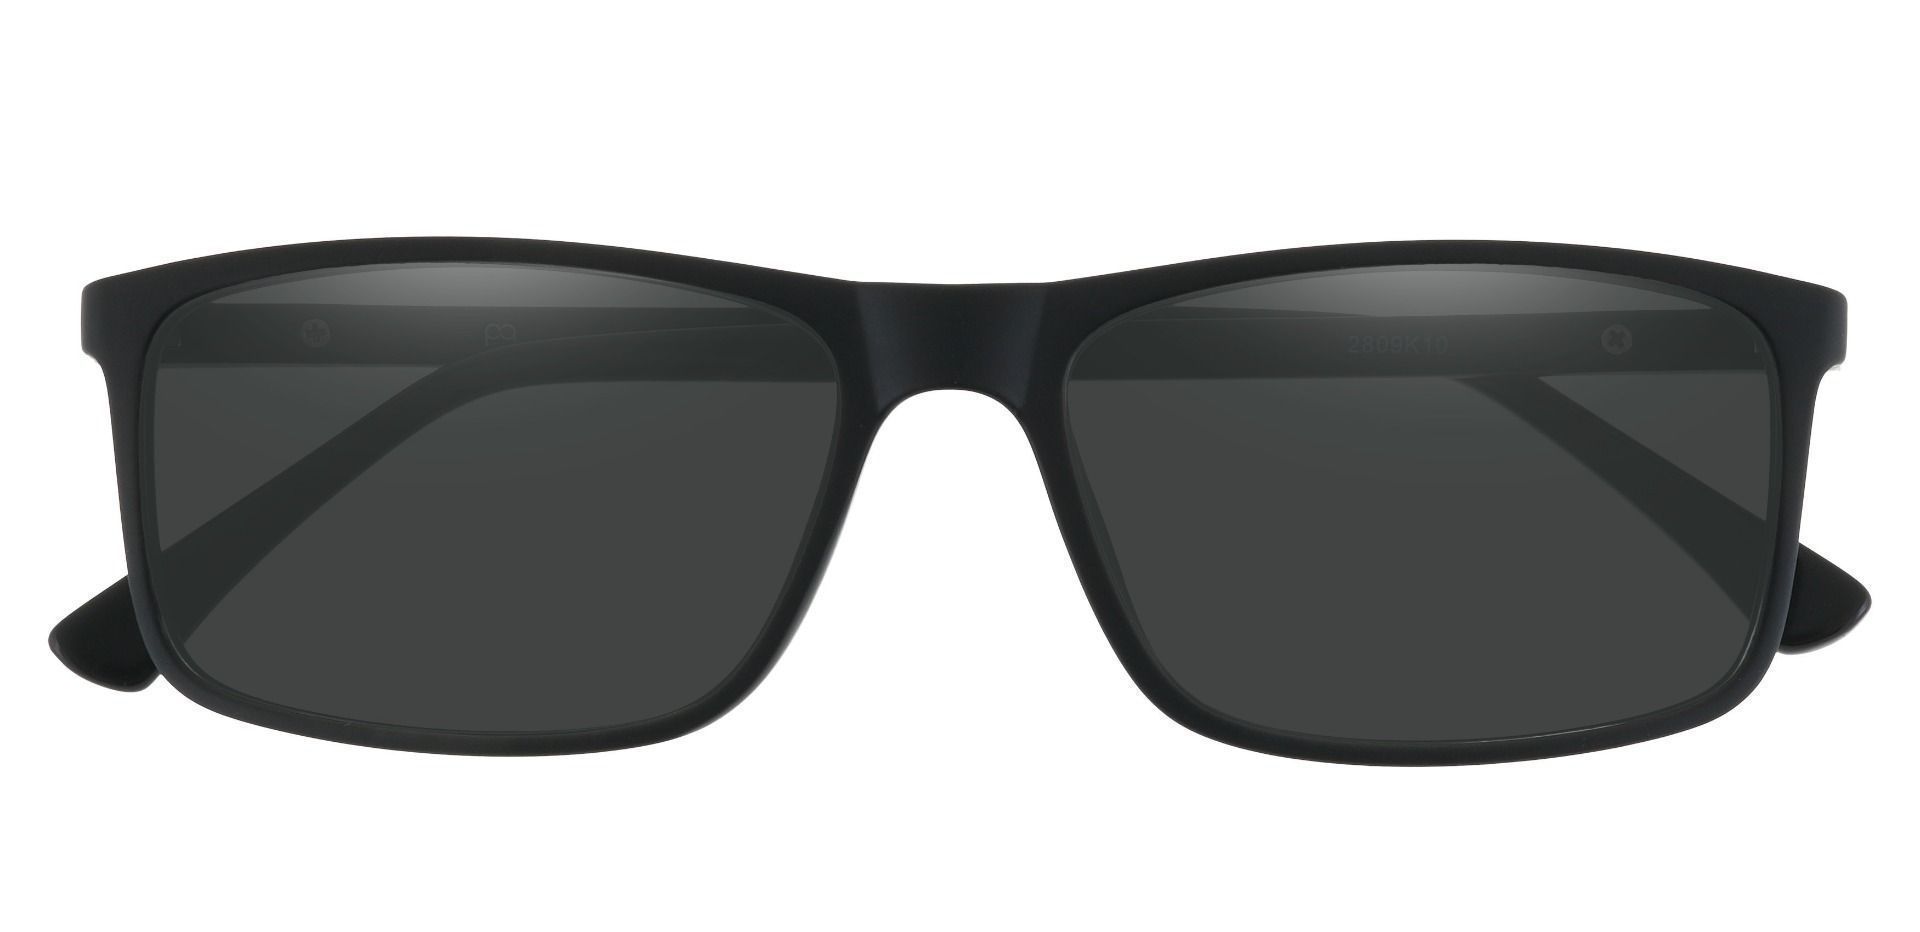 Montana Rectangle Progressive Sunglasses - Black Frame With Gray Lenses ...